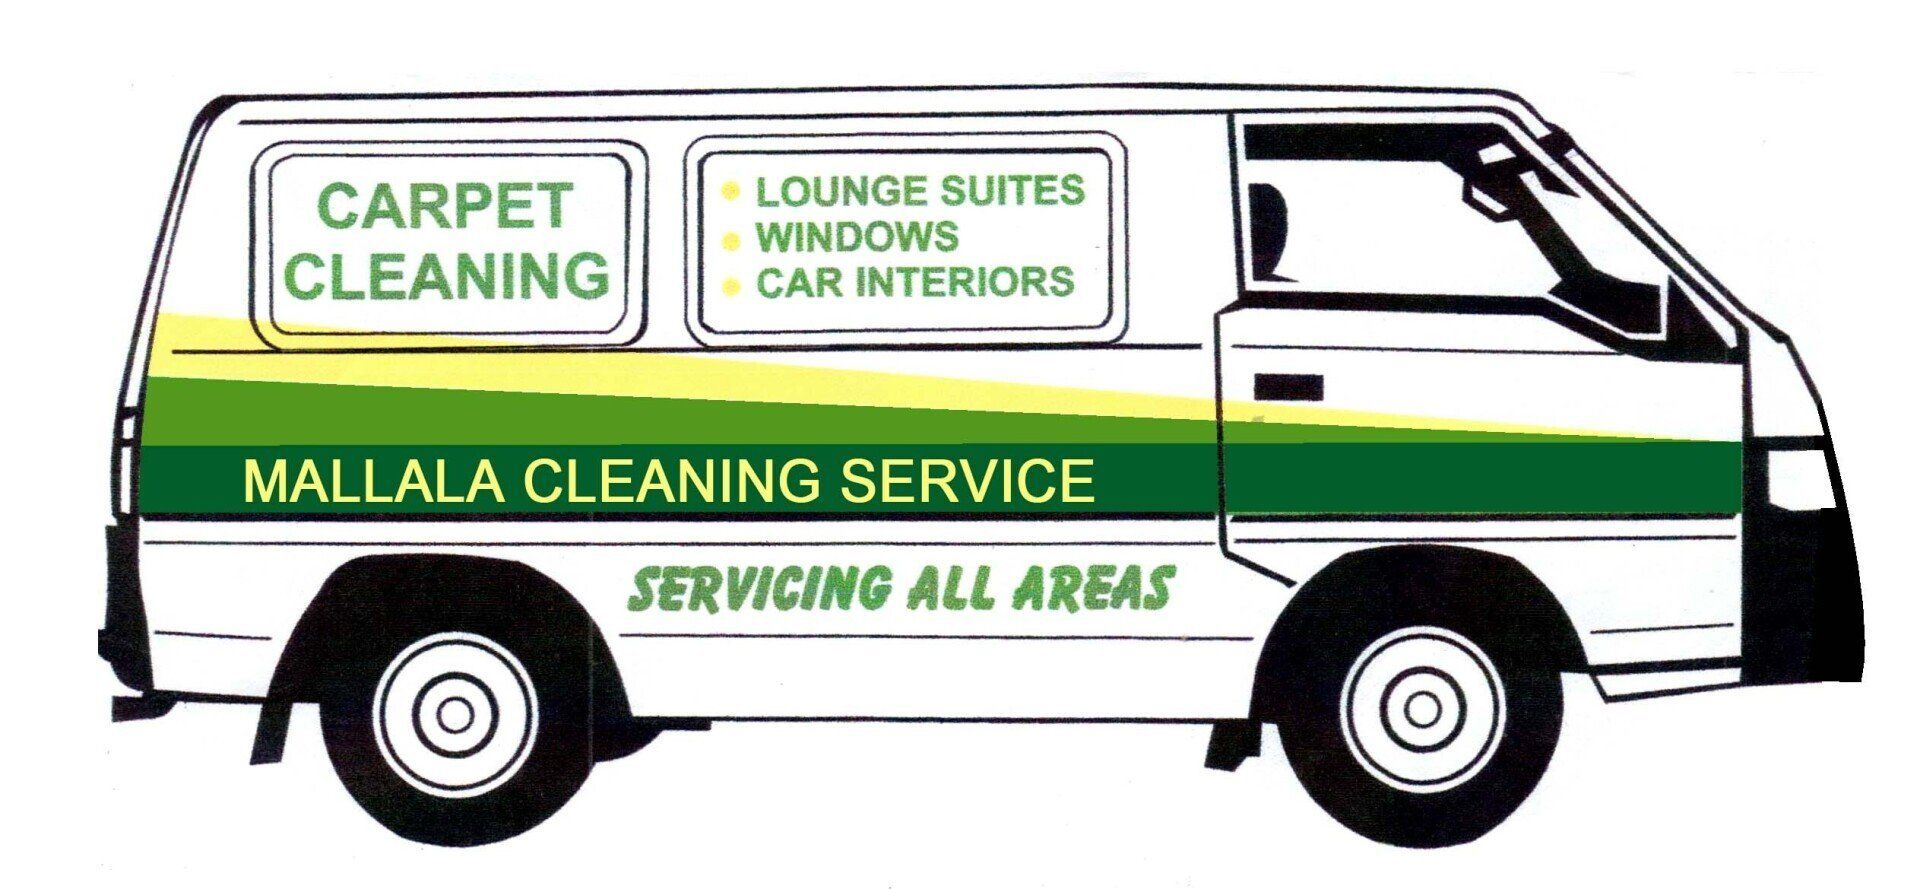 Mallala Cleaning Service Logo